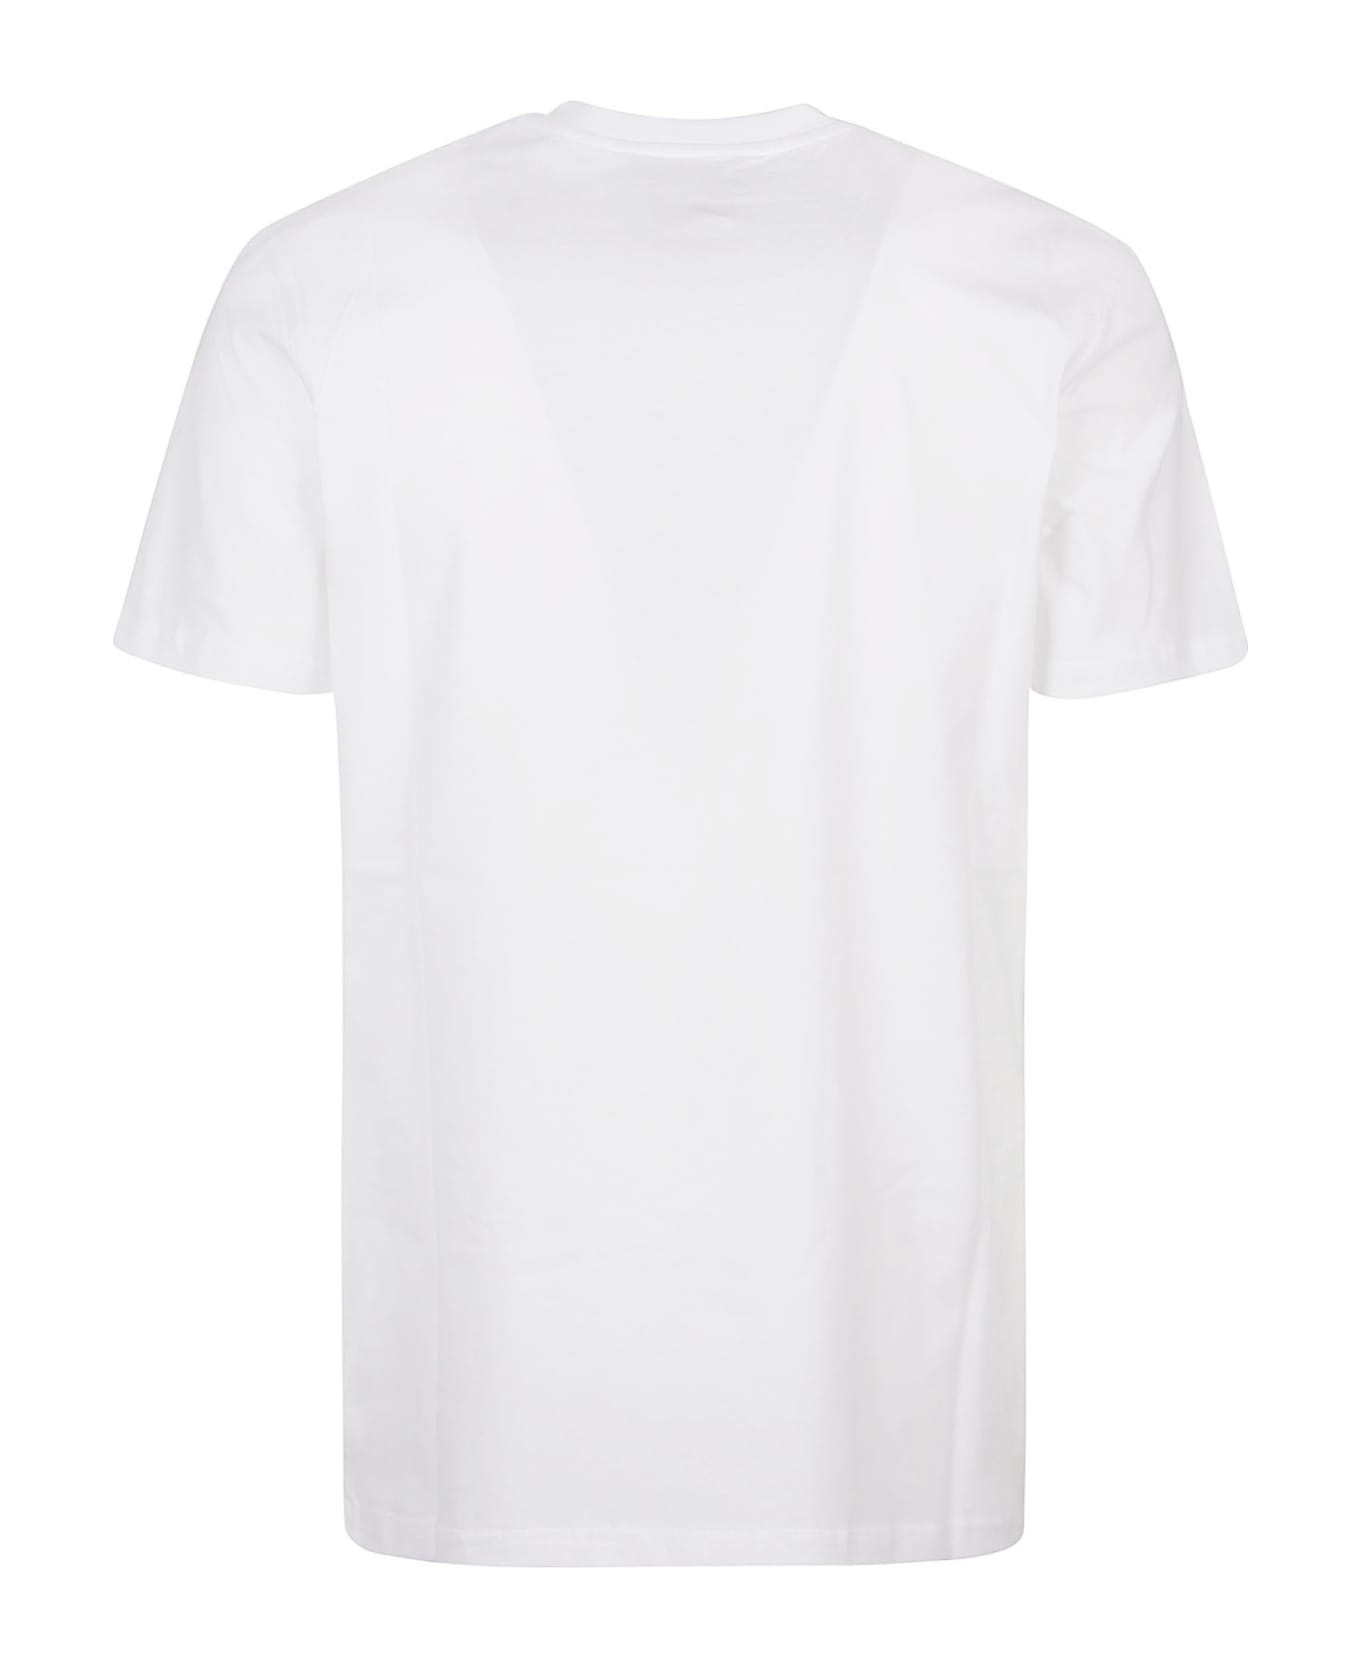 Moschino T-shirt - Bianco Fantasia